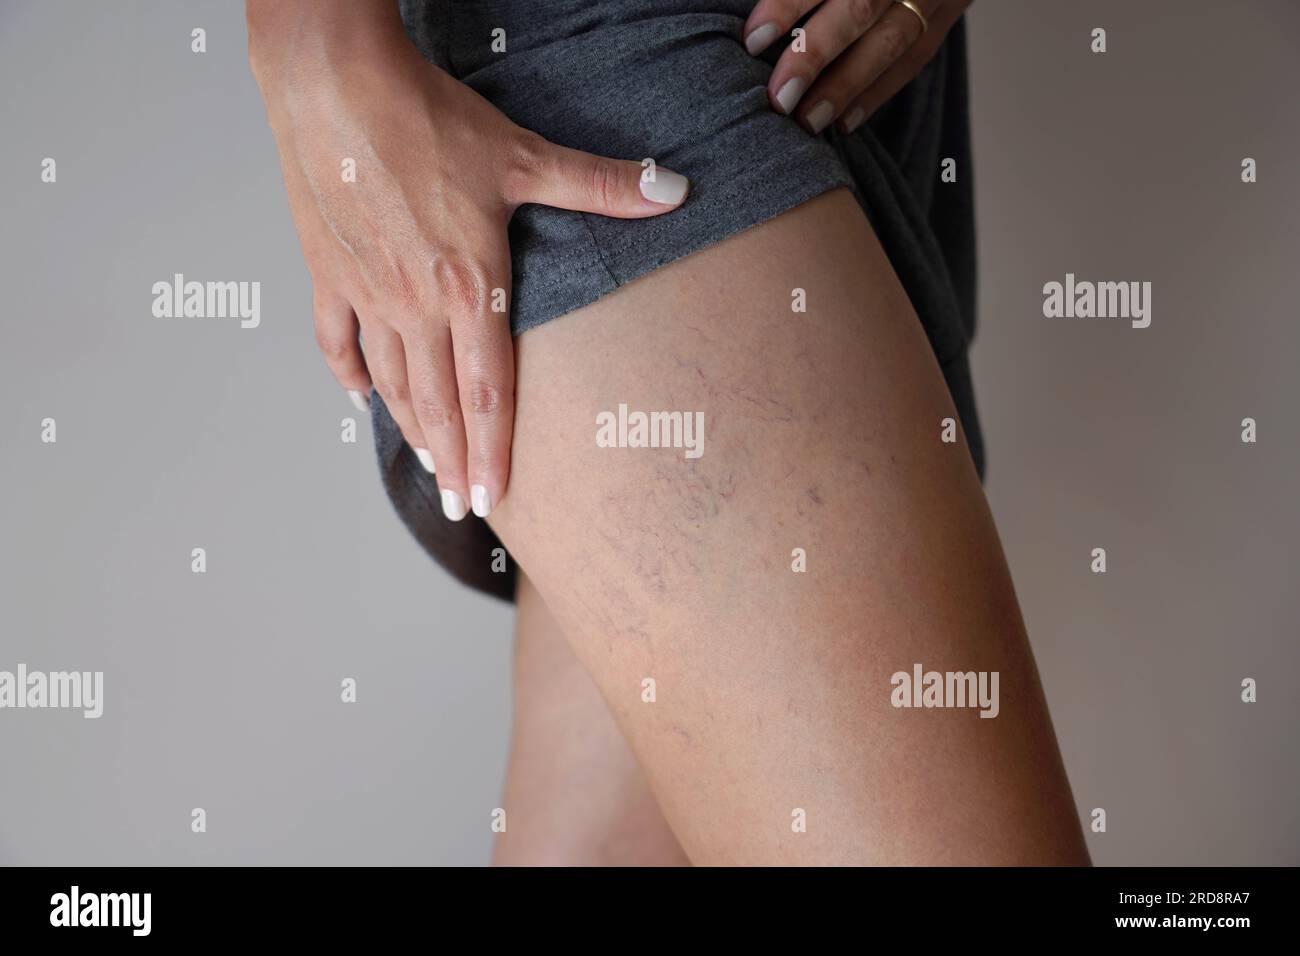 Vene varicose sulle gambe delle donne Foto Stock